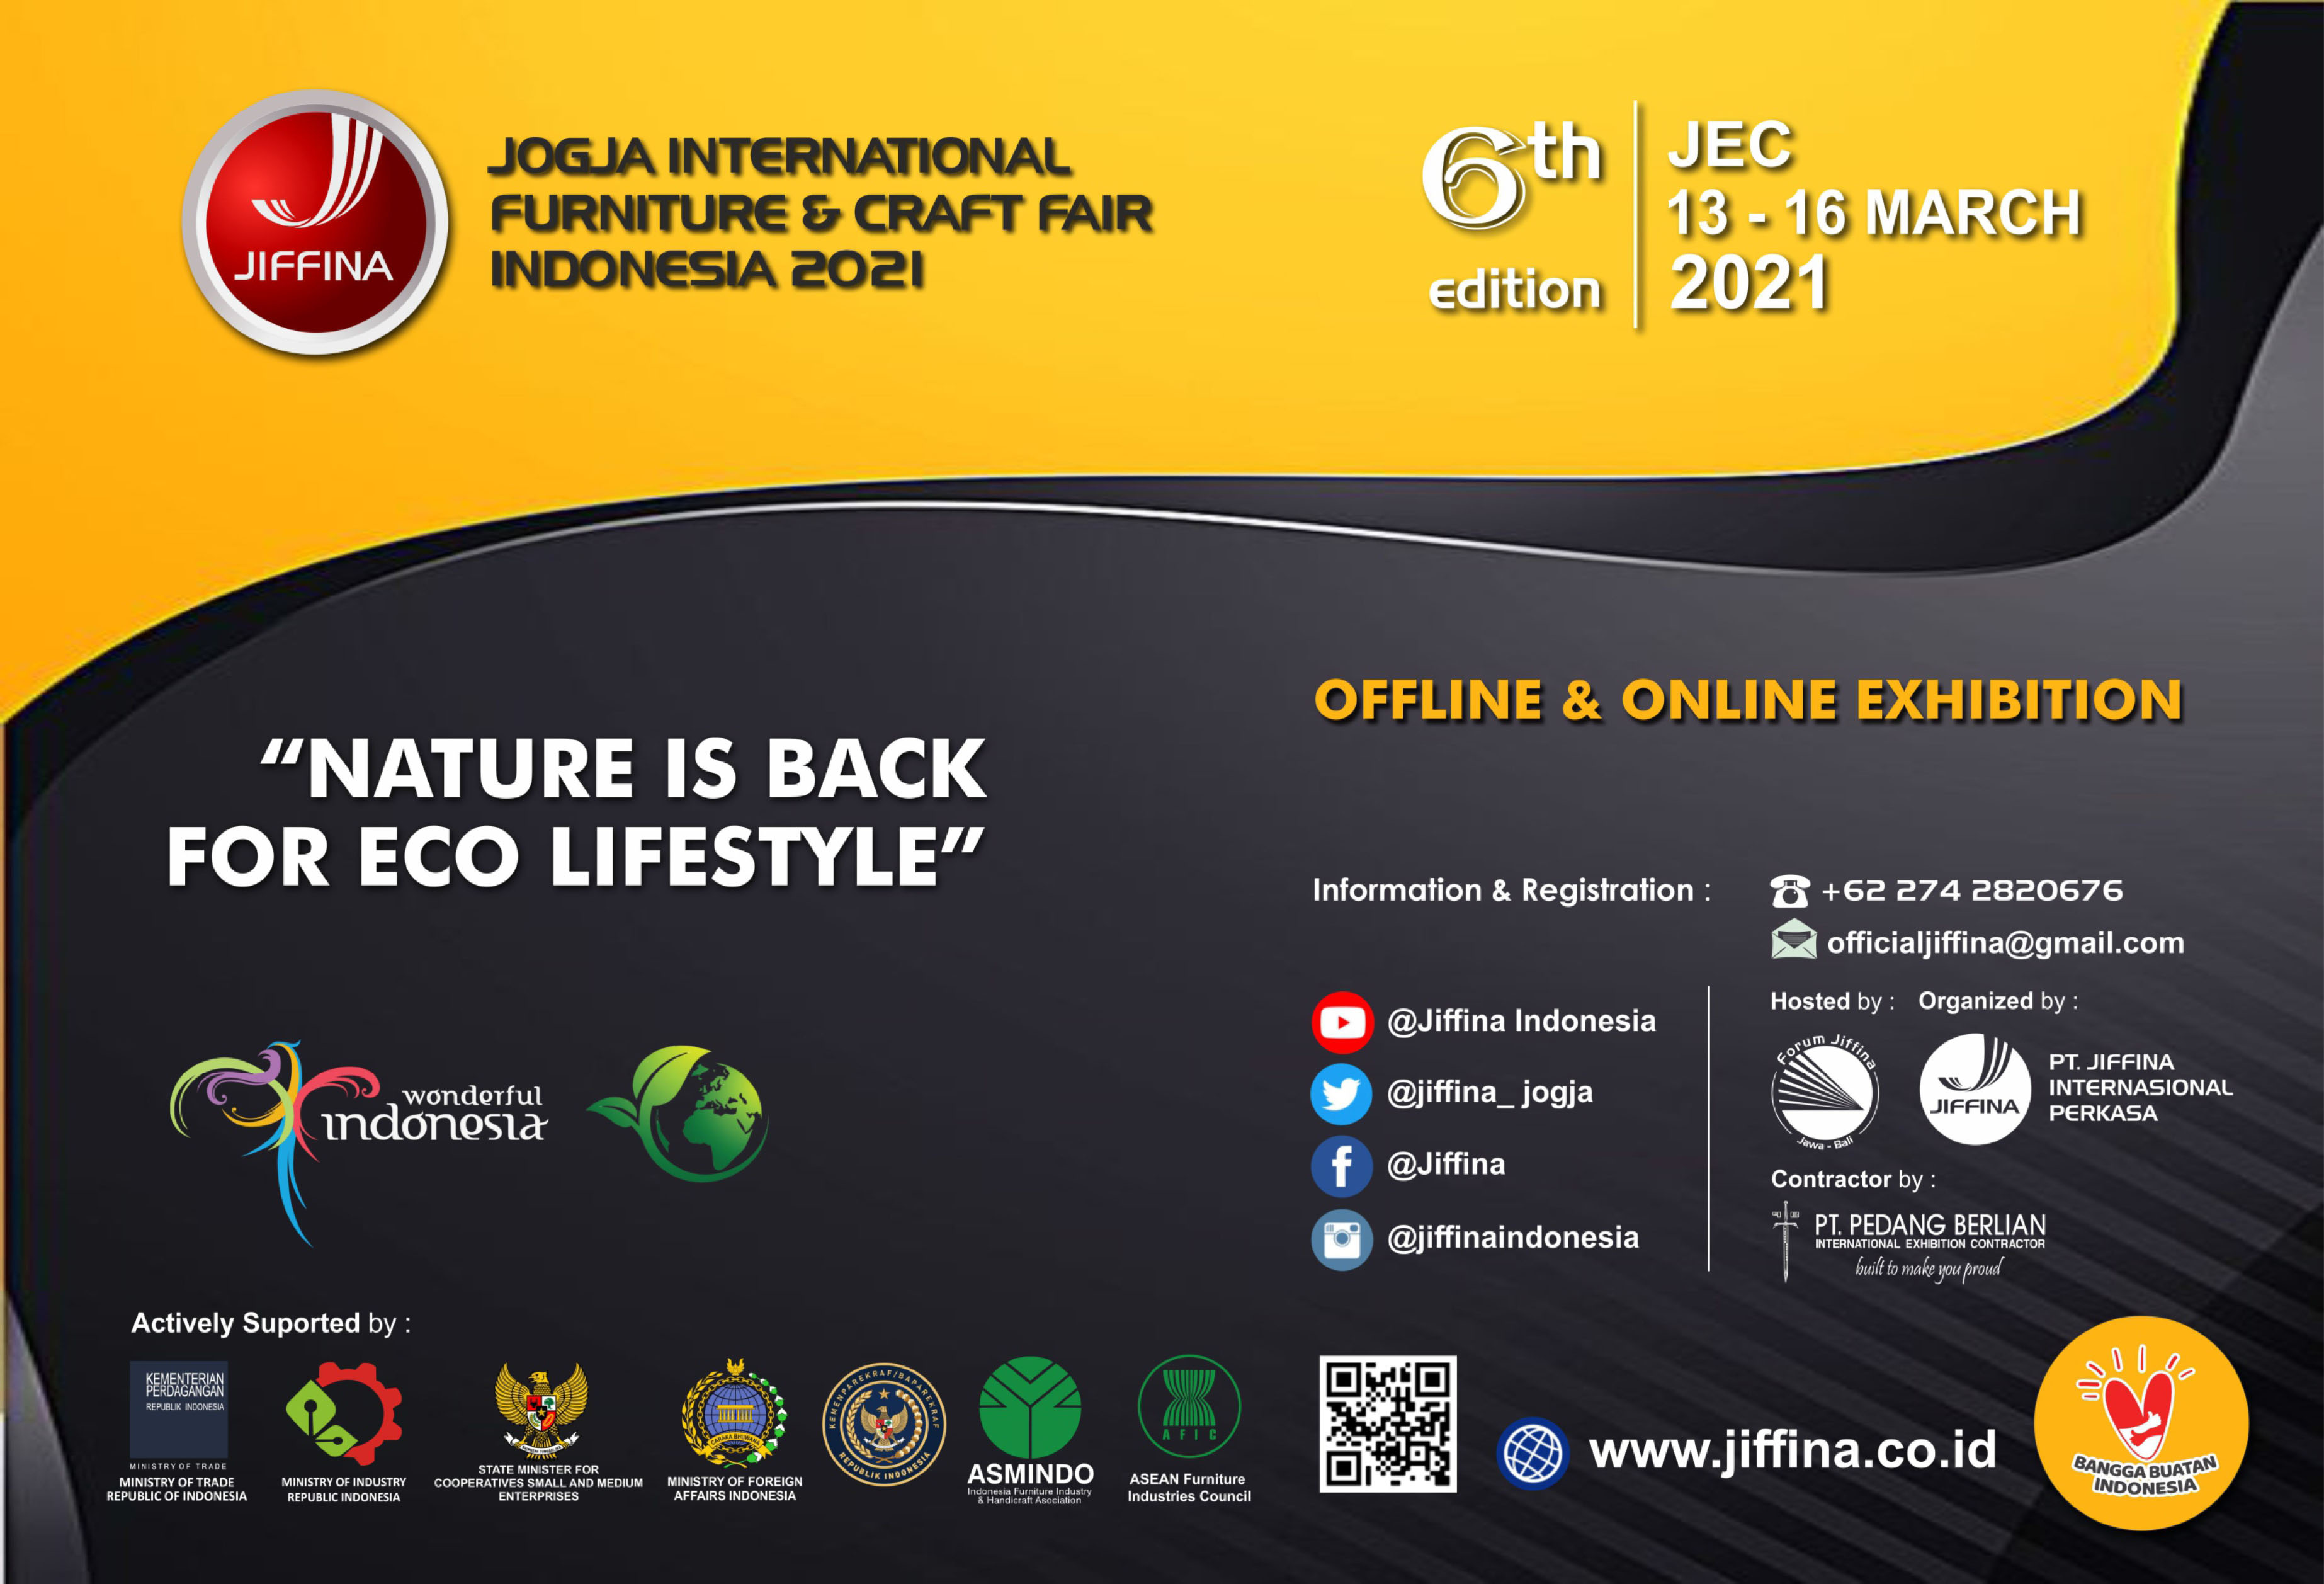  Jogja International Furniture & Craft Fair 2021